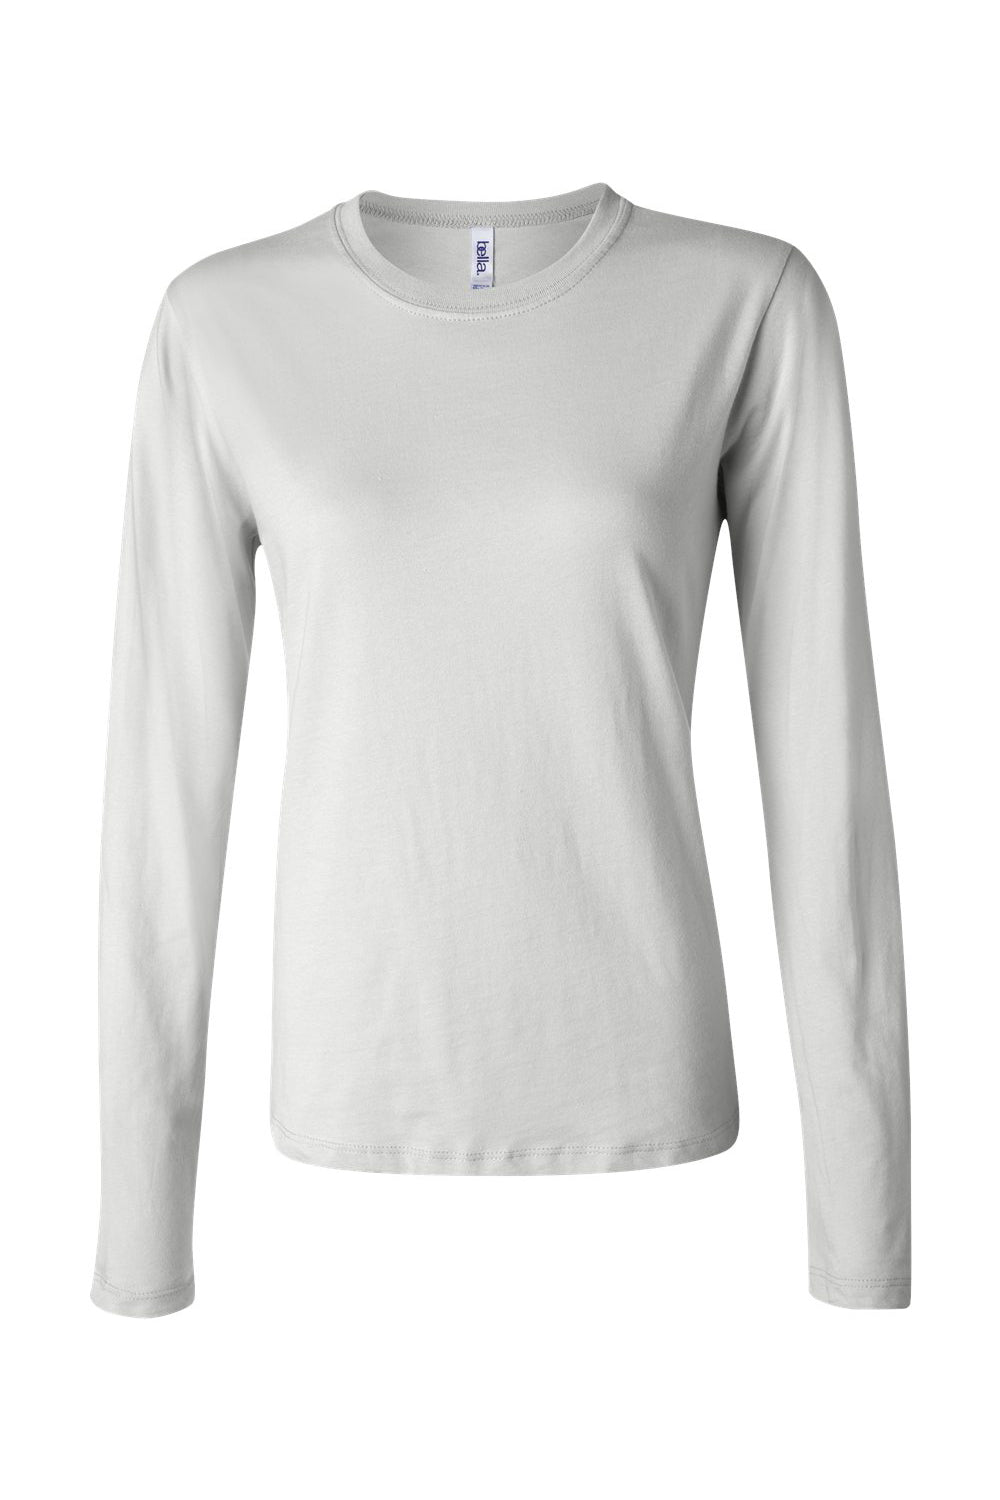 Bella + Canvas B6500/6500 Womens Jersey Long Sleeve Crewneck T-Shirt White Flat Front